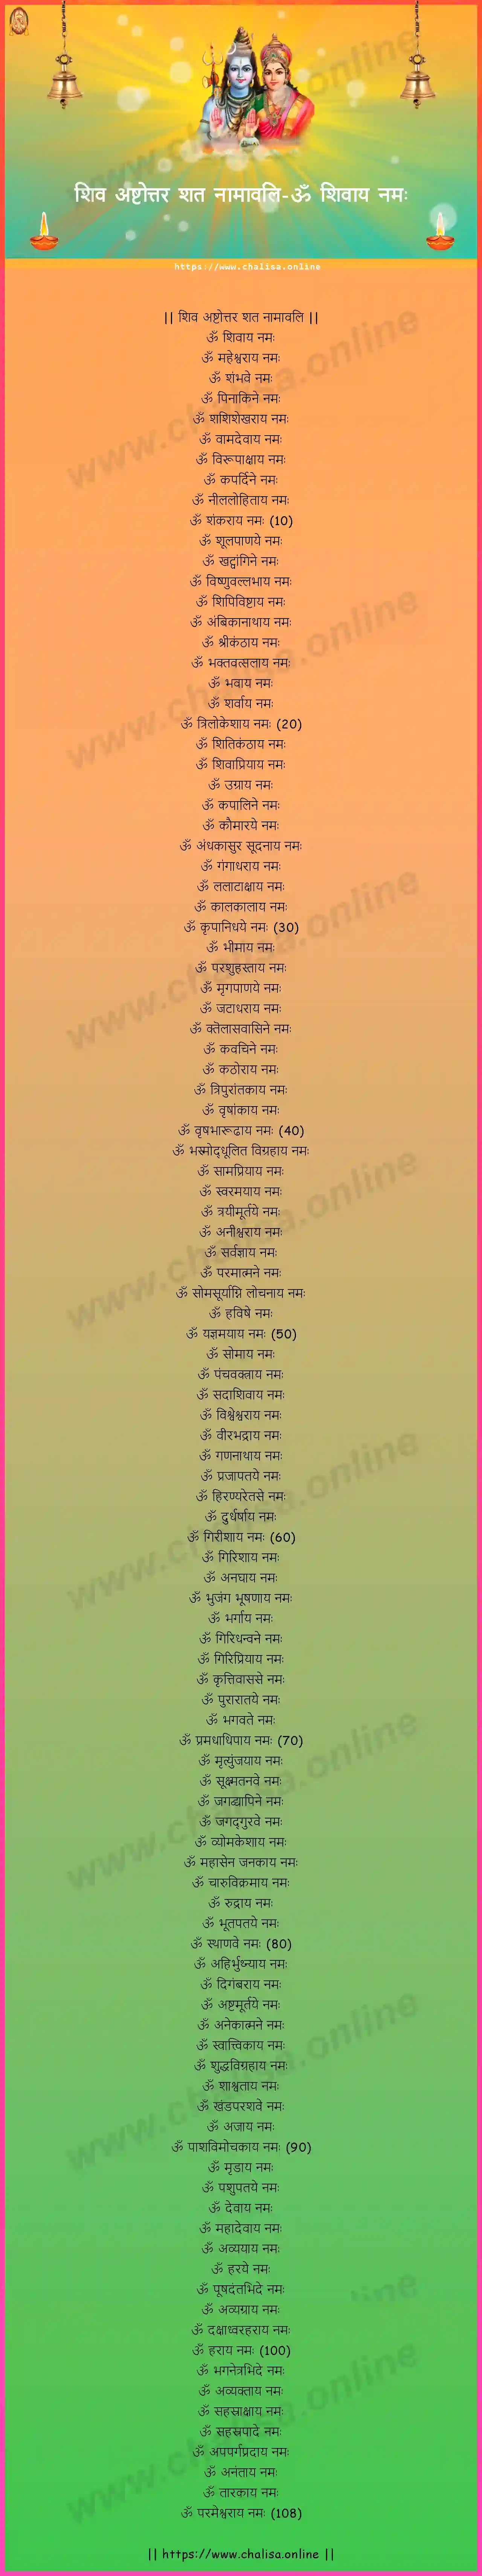 om-sivaya-namah-shiva-ashtottara-sata-namavali-nepali-nepali-lyrics-download